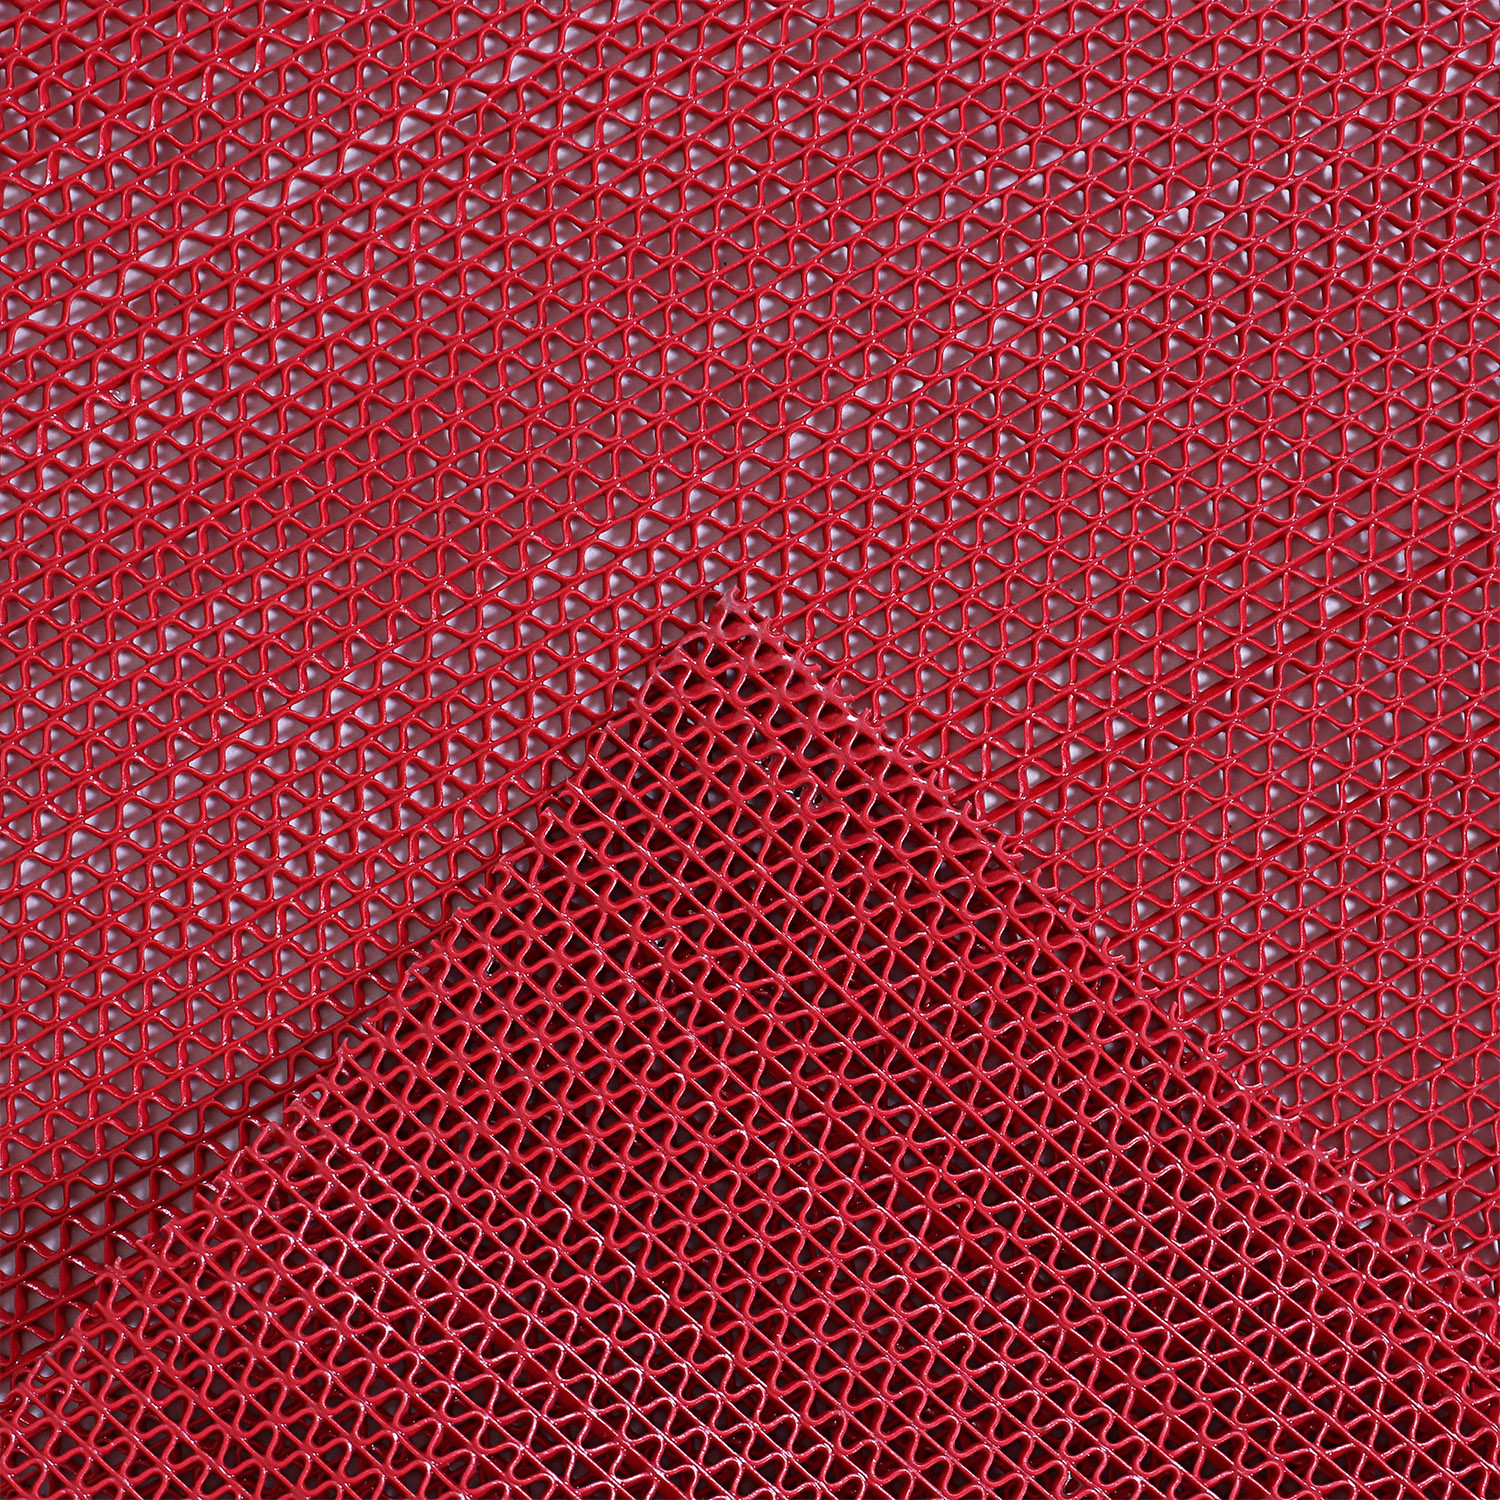 Kuber Industries Rubber Waterproof Anti-Skid Swimming Pool Mat|Shower Mat|Rainmat For Entrance Area,Bathroom,2 x 4 Feet (Red)